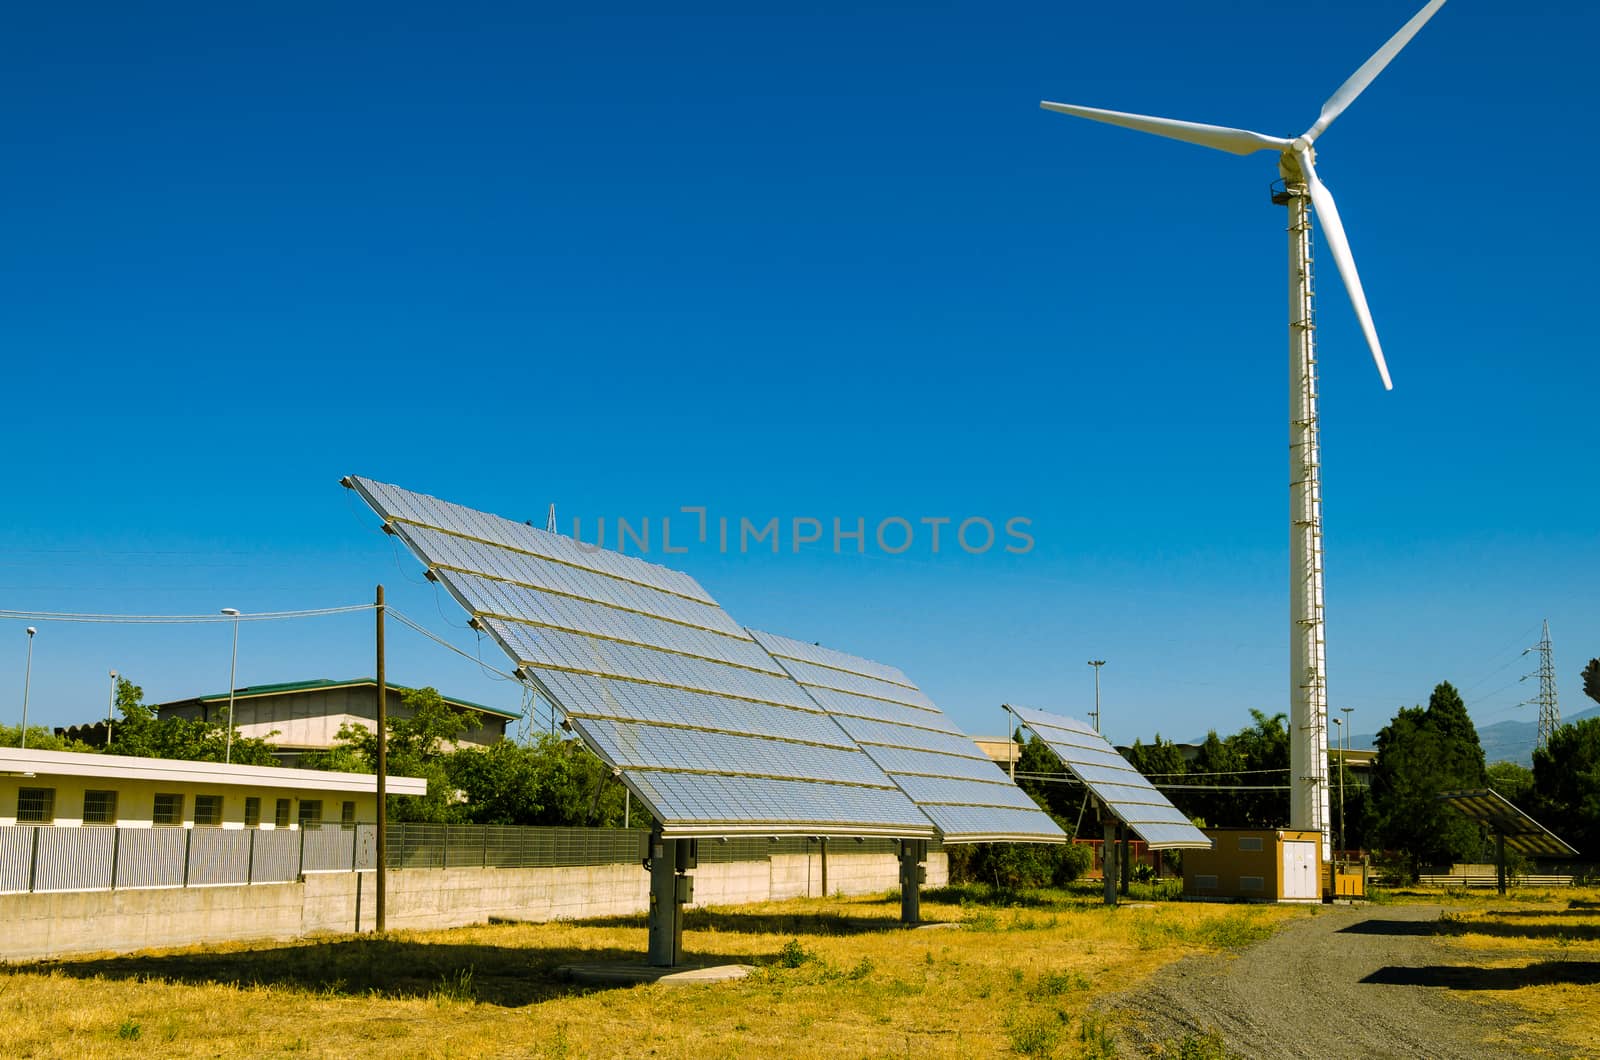 Solar panel and Wind turbine by alanstix64